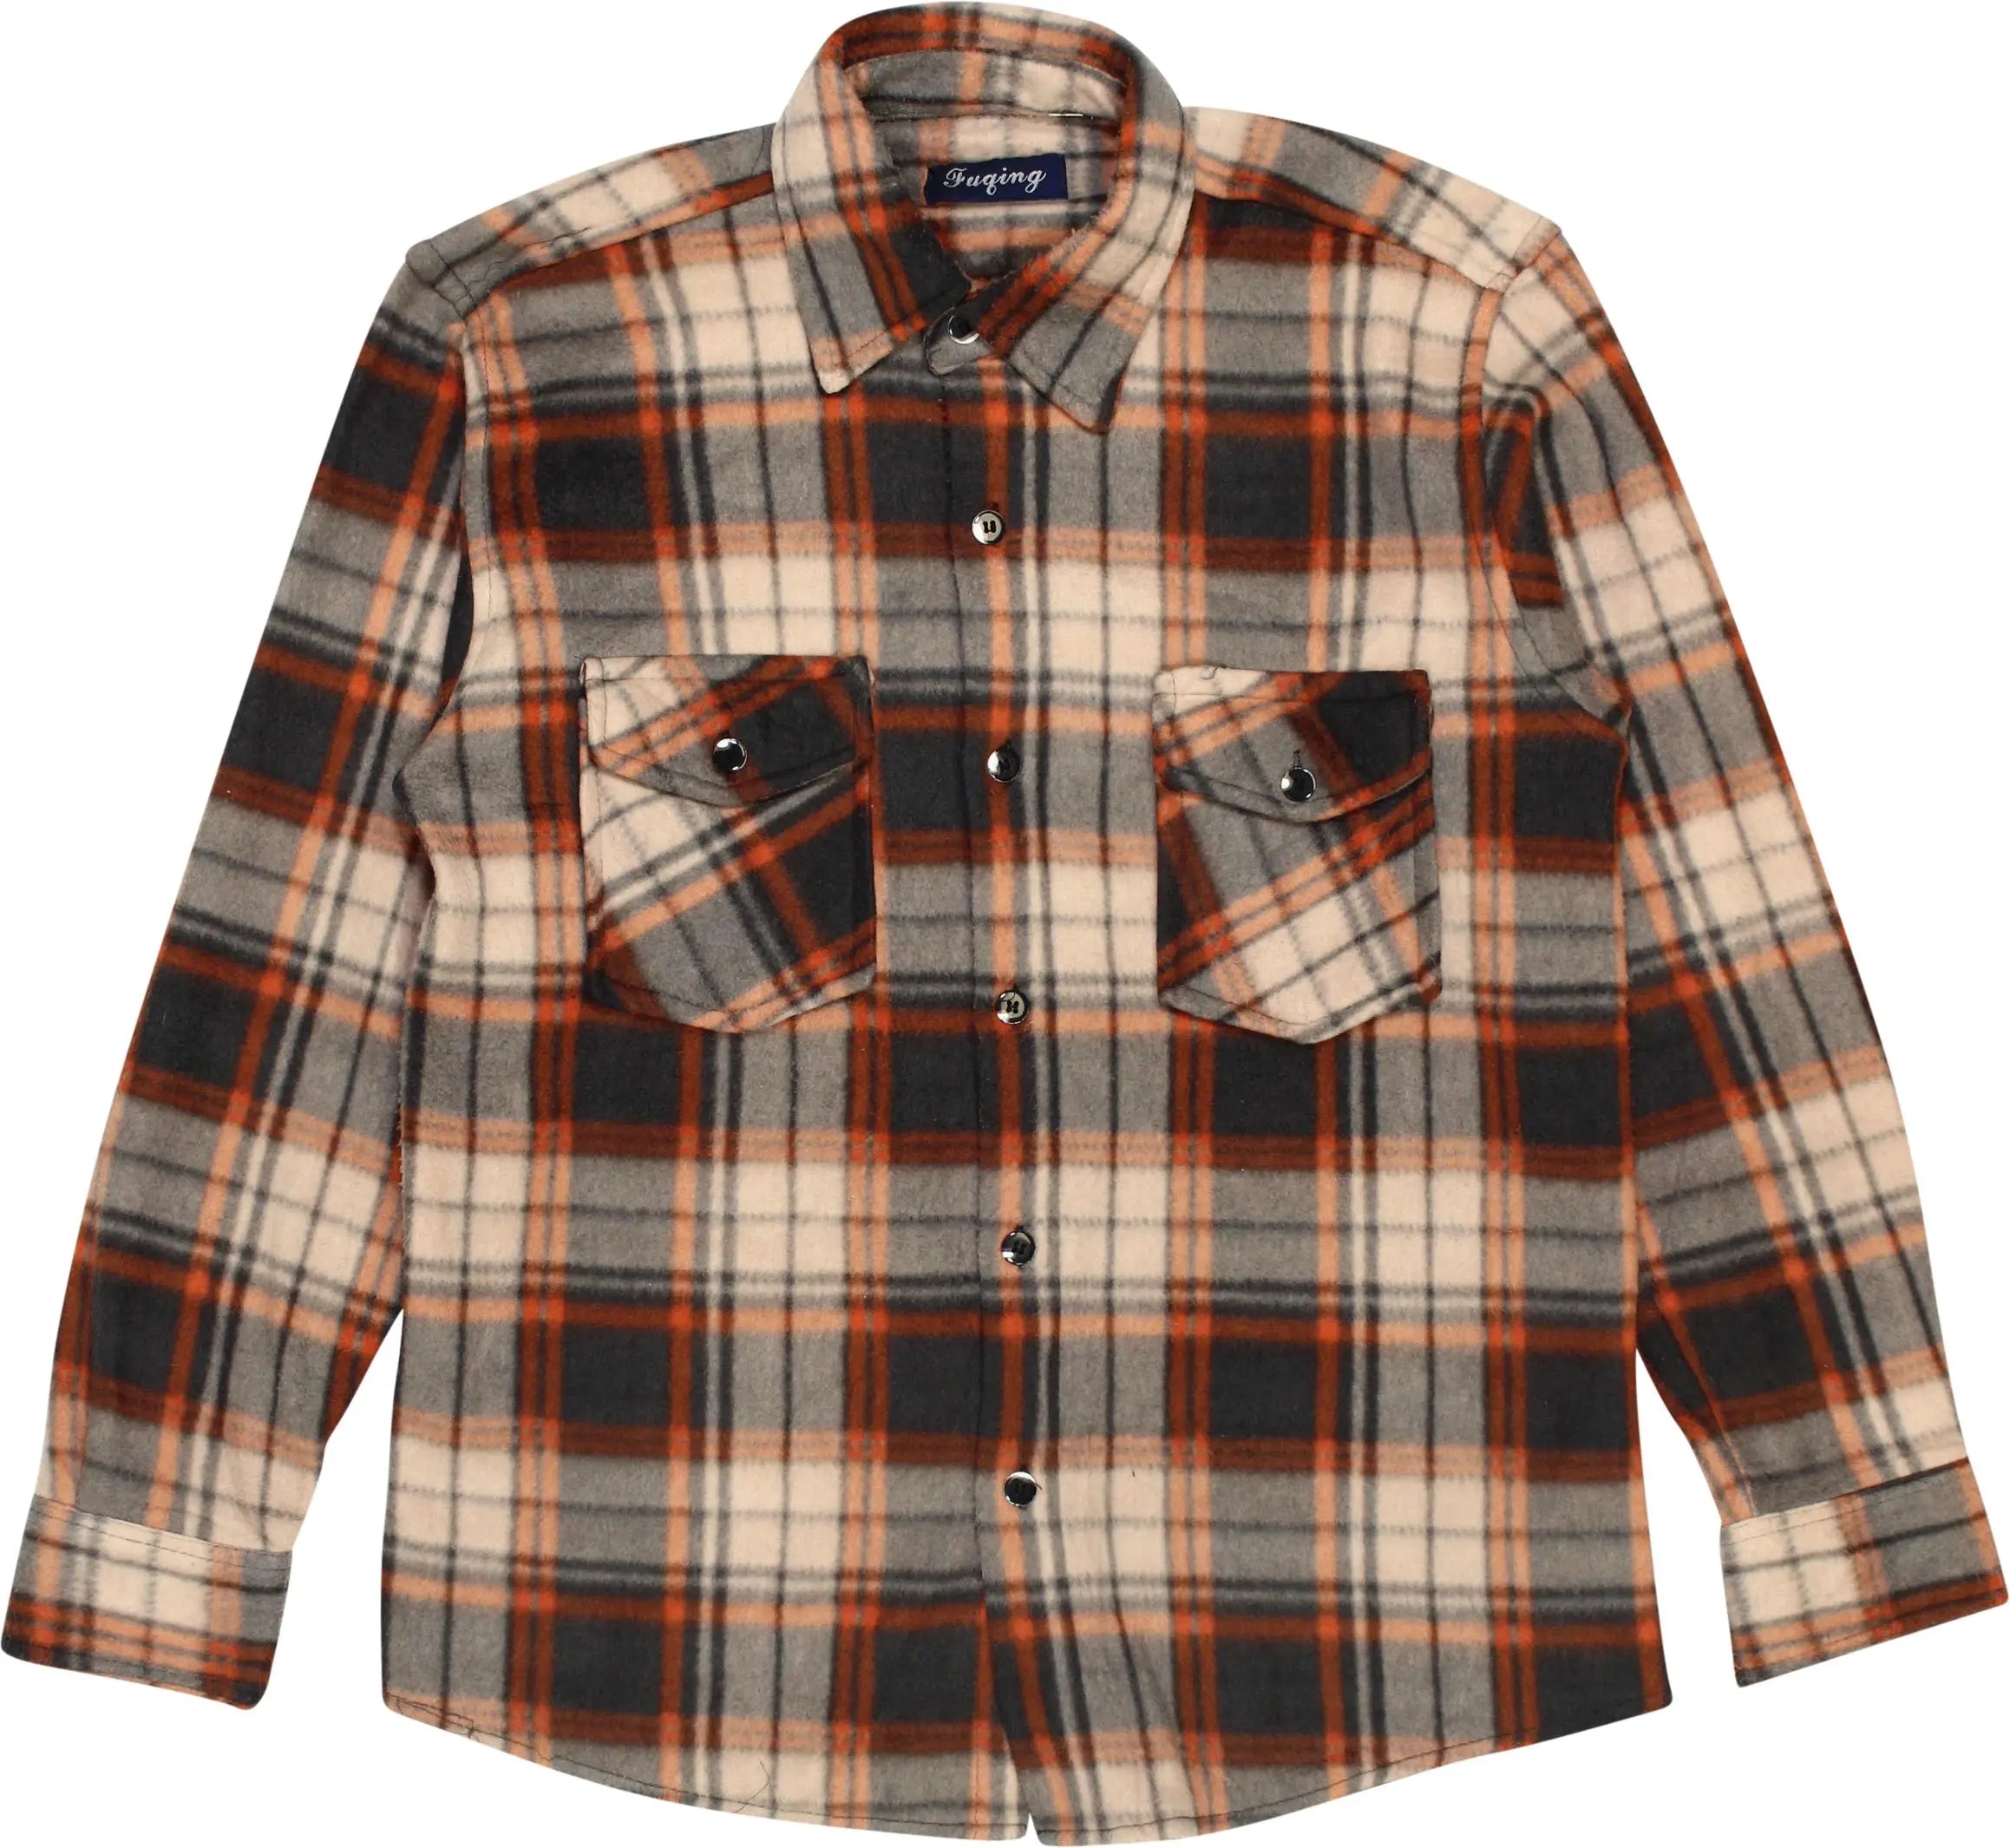 Fuging - Flannel Fleece Shirt- ThriftTale.com - Vintage and second handclothing